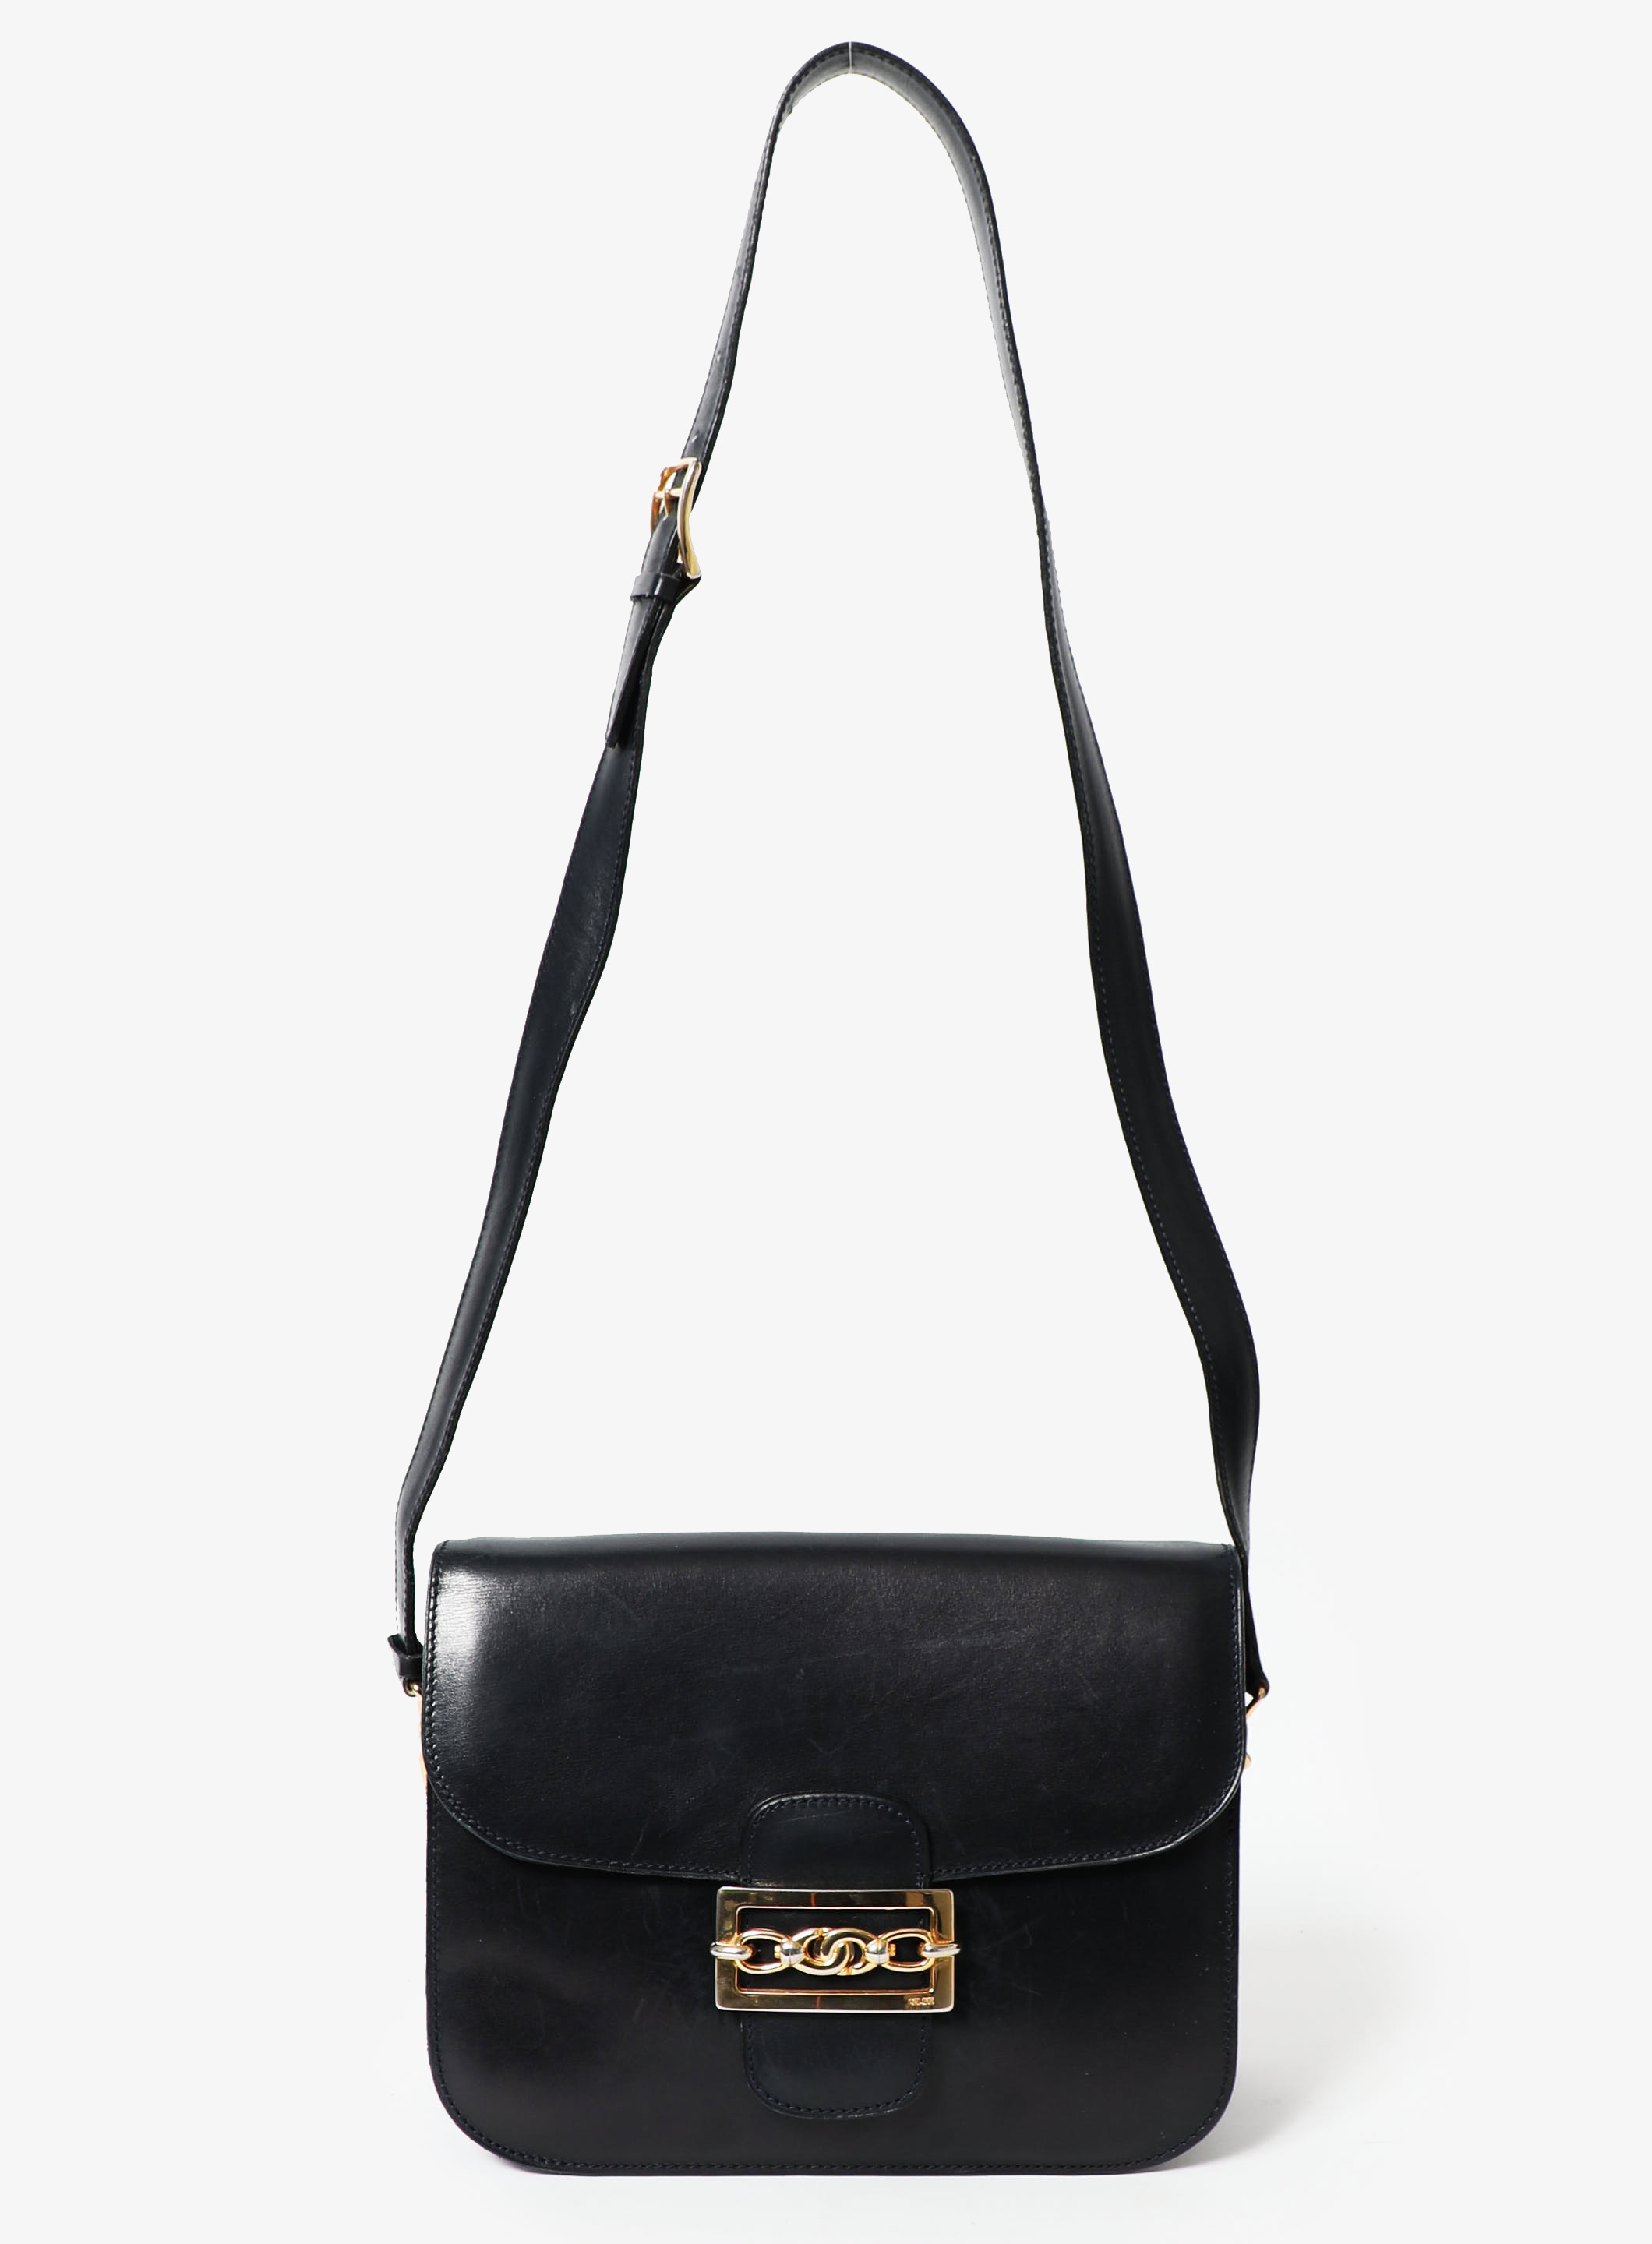 Stunning vintage CELINE Paris tan leather chain link shoulder bag purse two  way